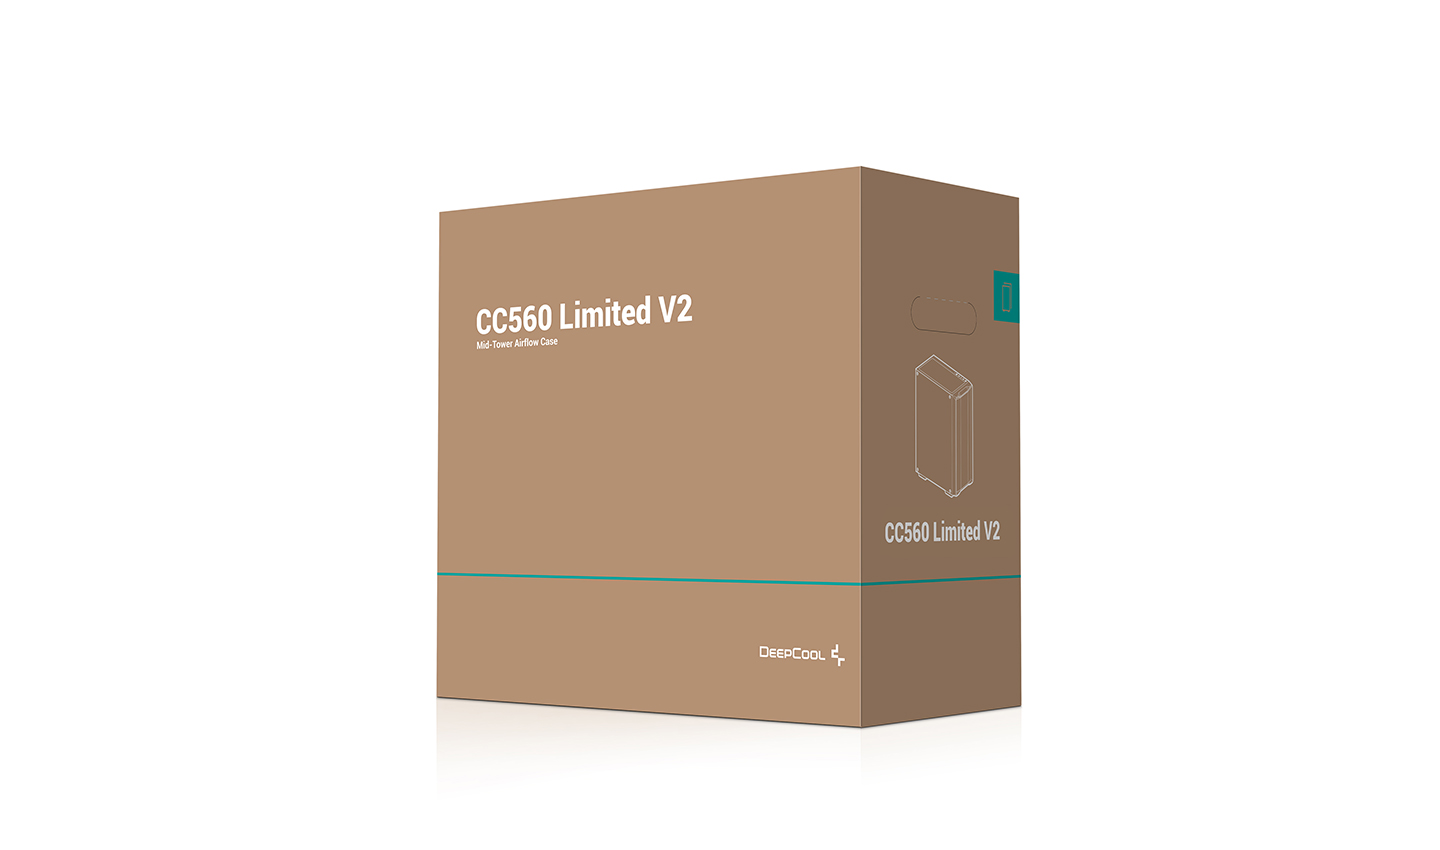 CC560 Limited V2 - DeepCool